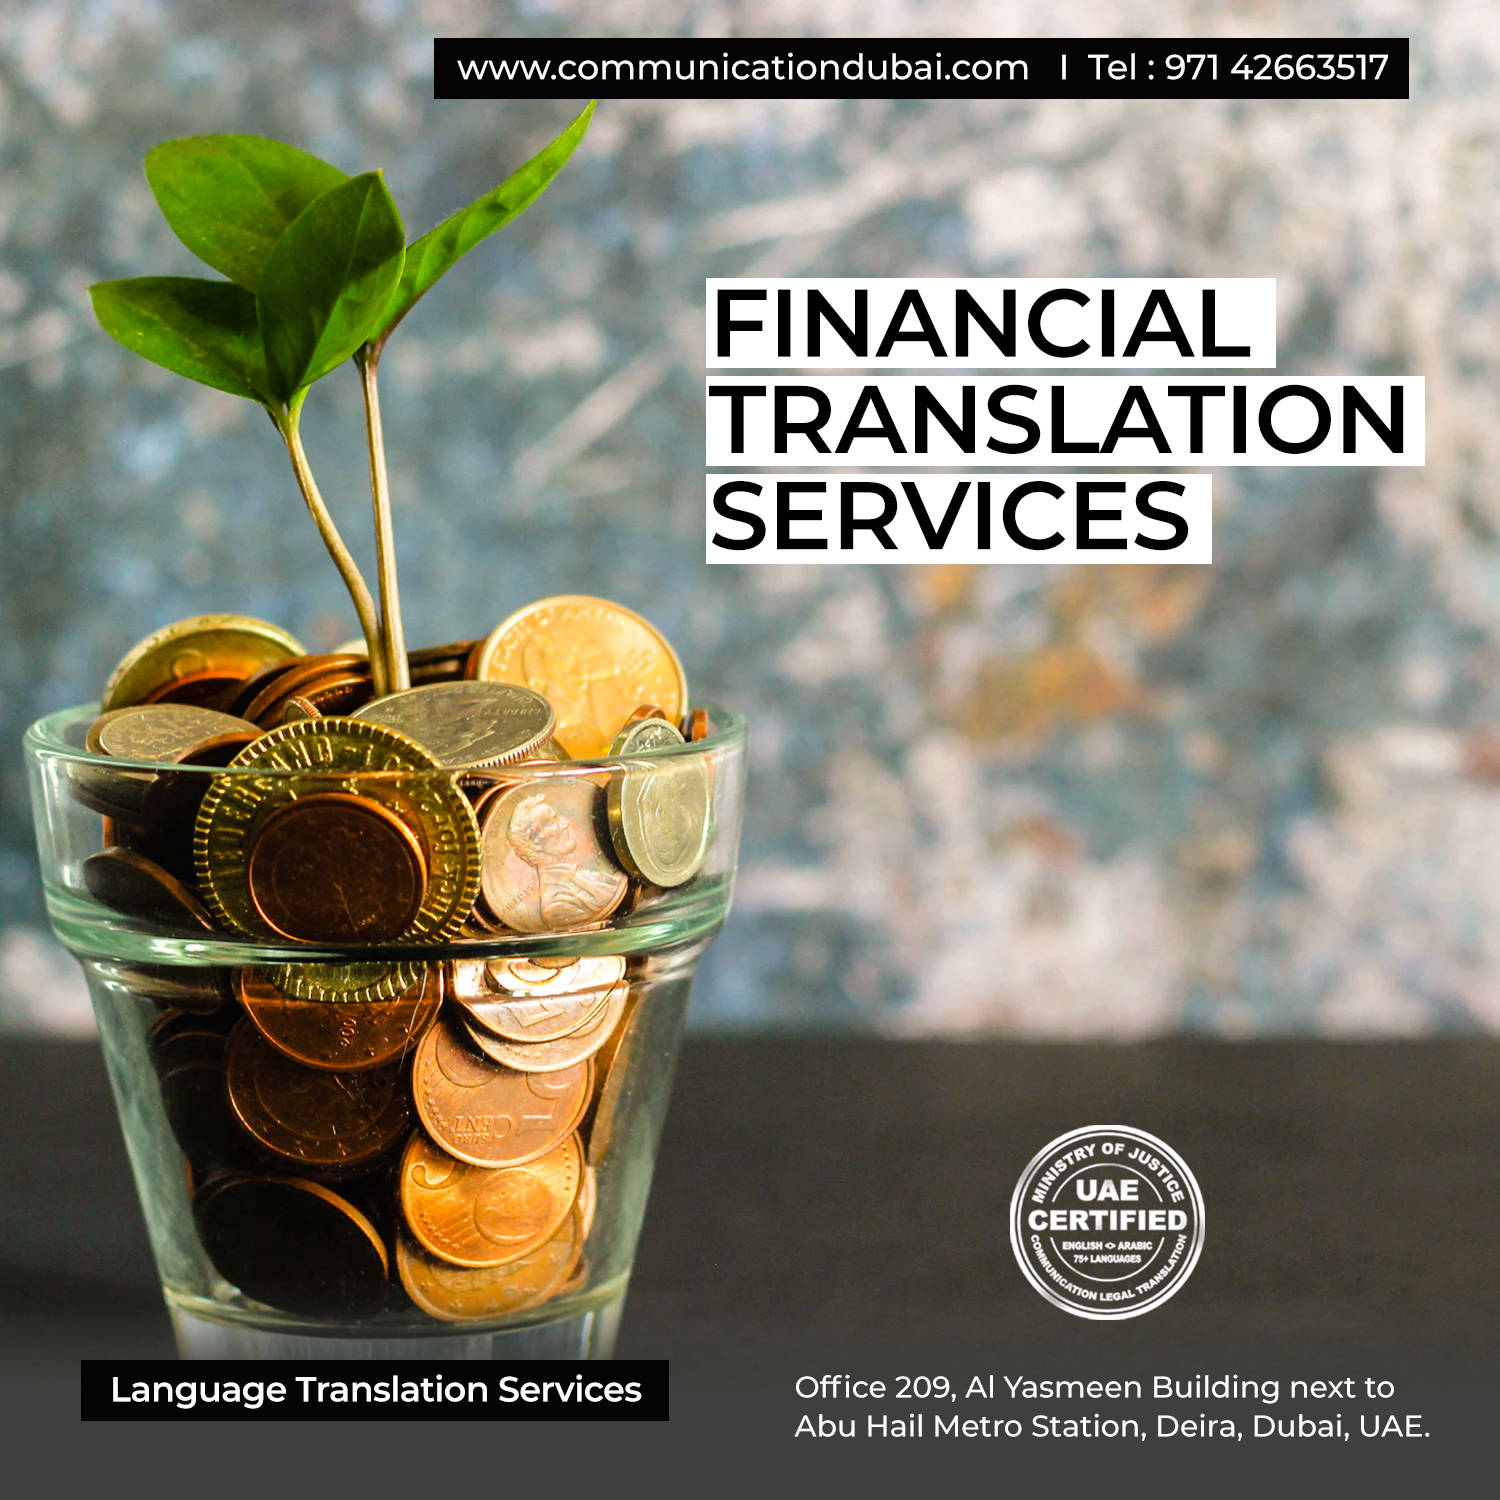 Financial Translation Services in Dubai